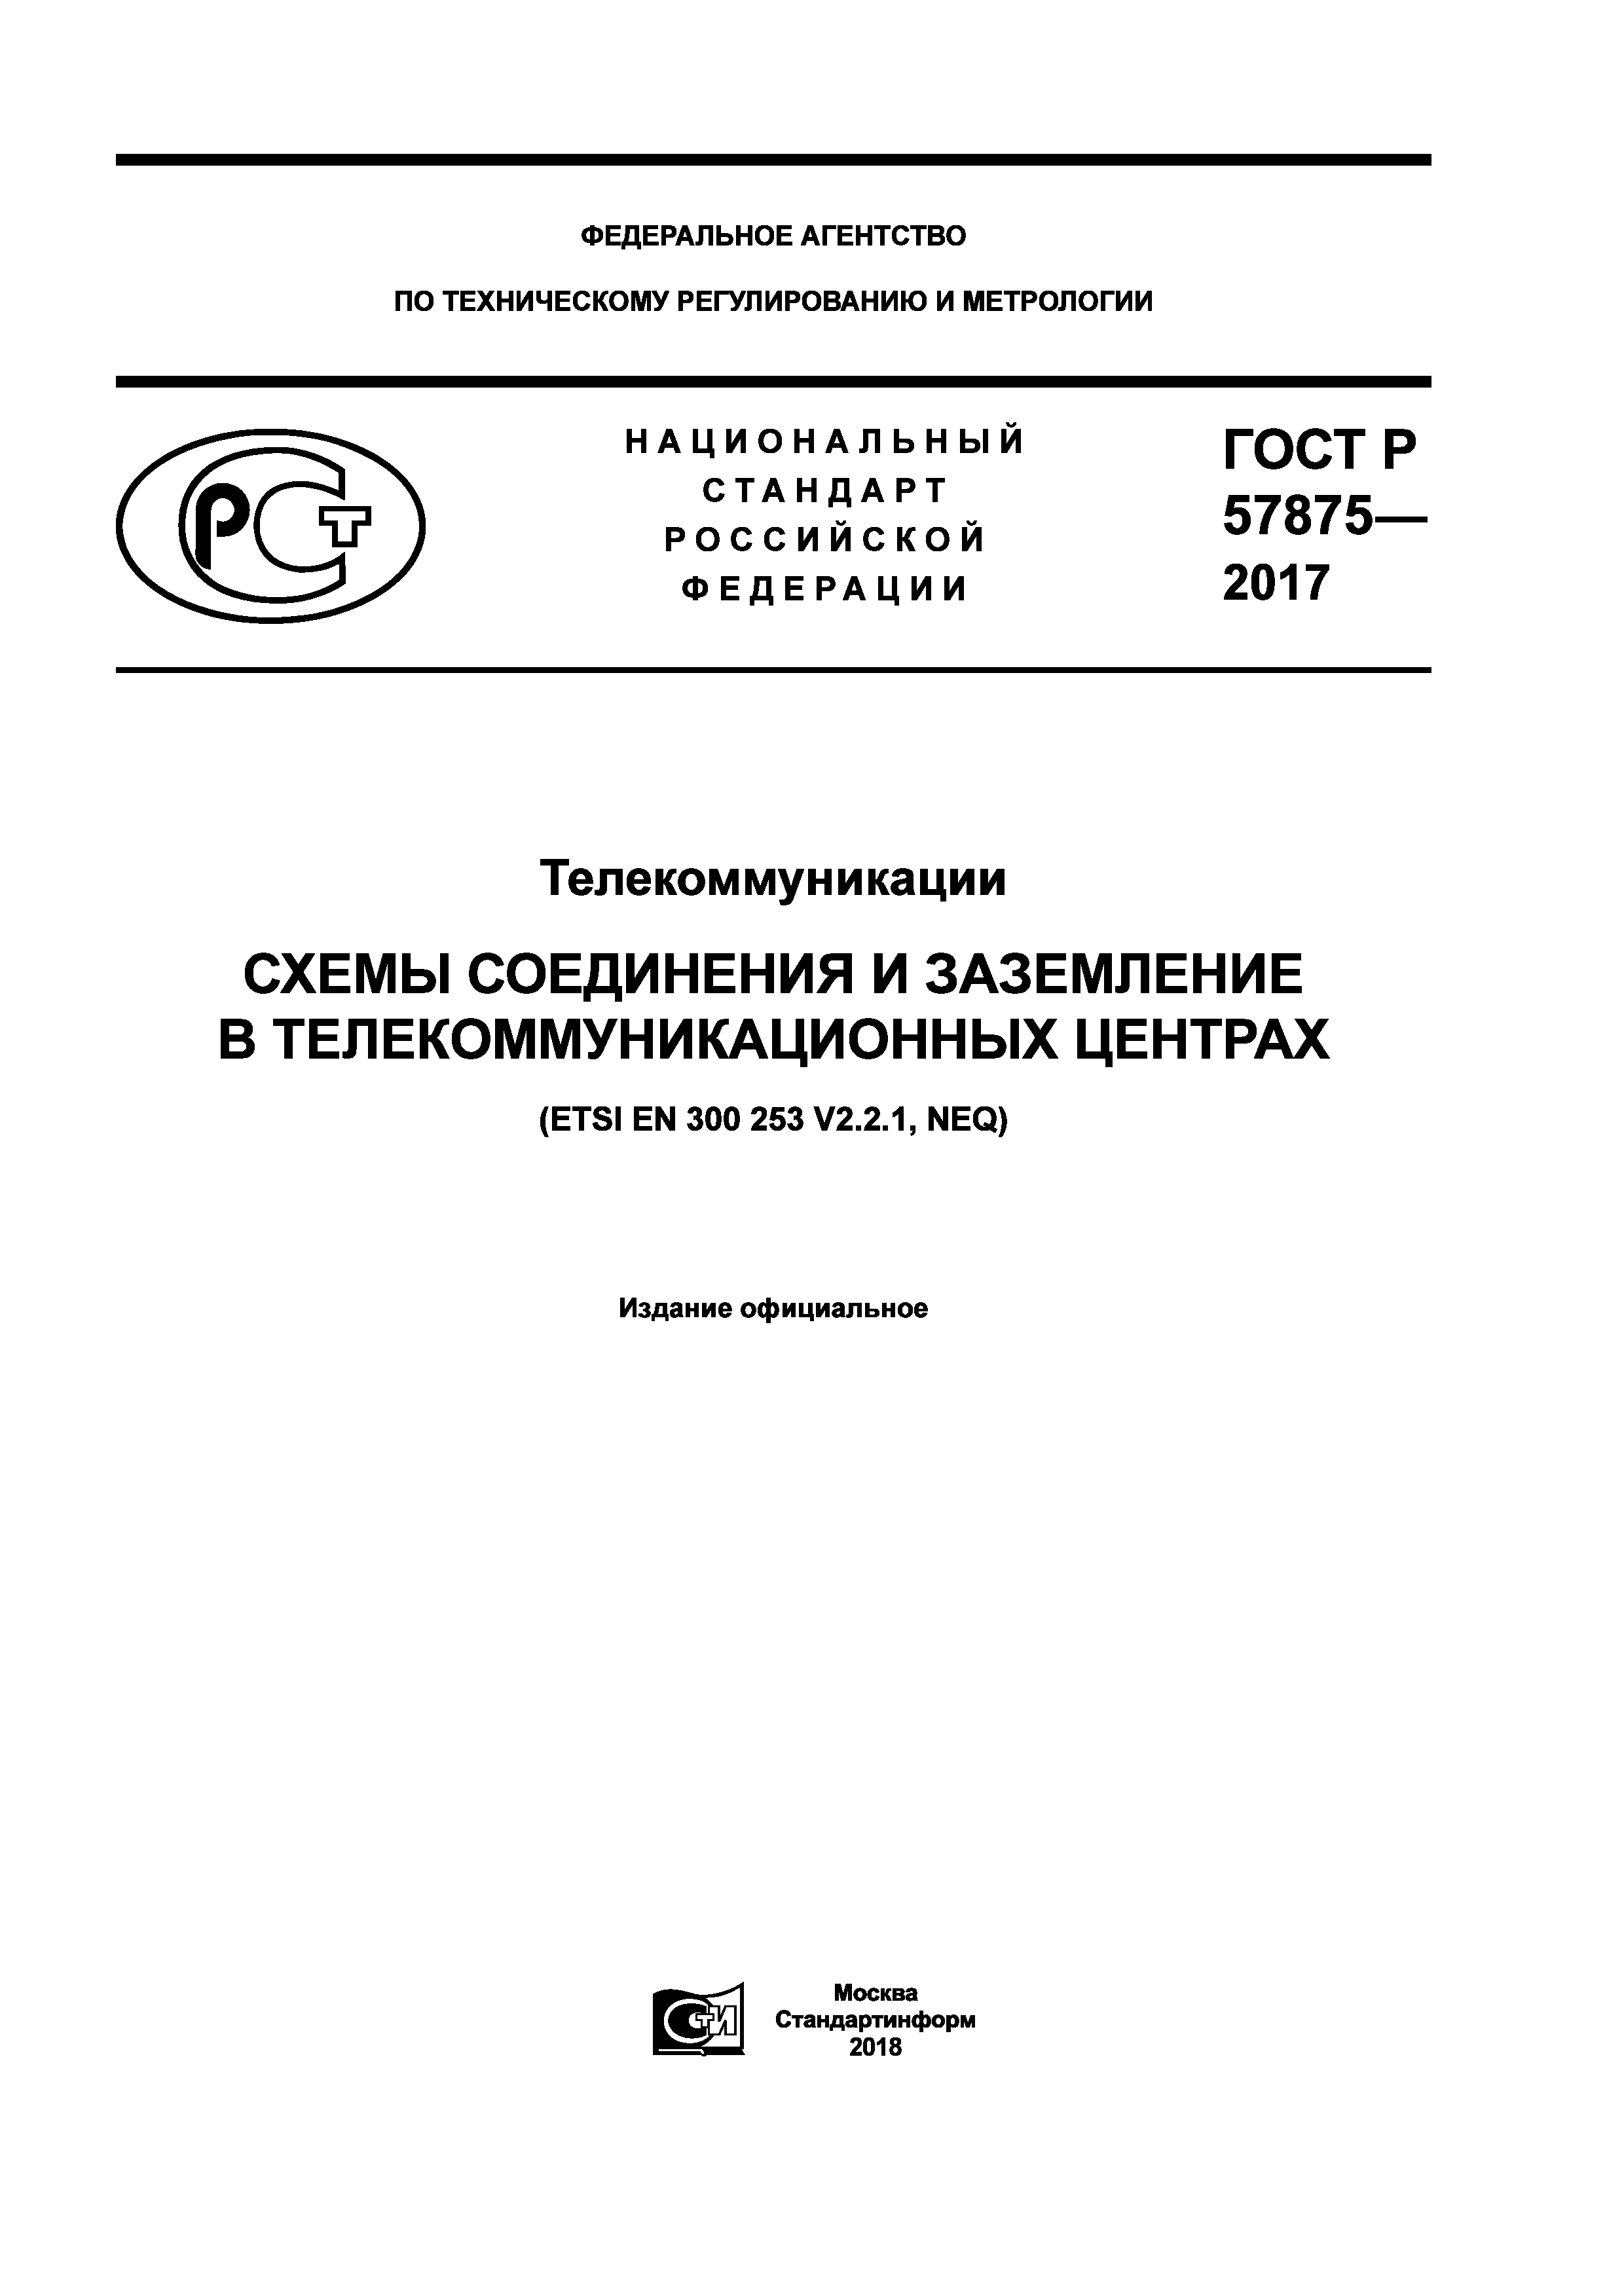 ГОСТ Р 57875-2017